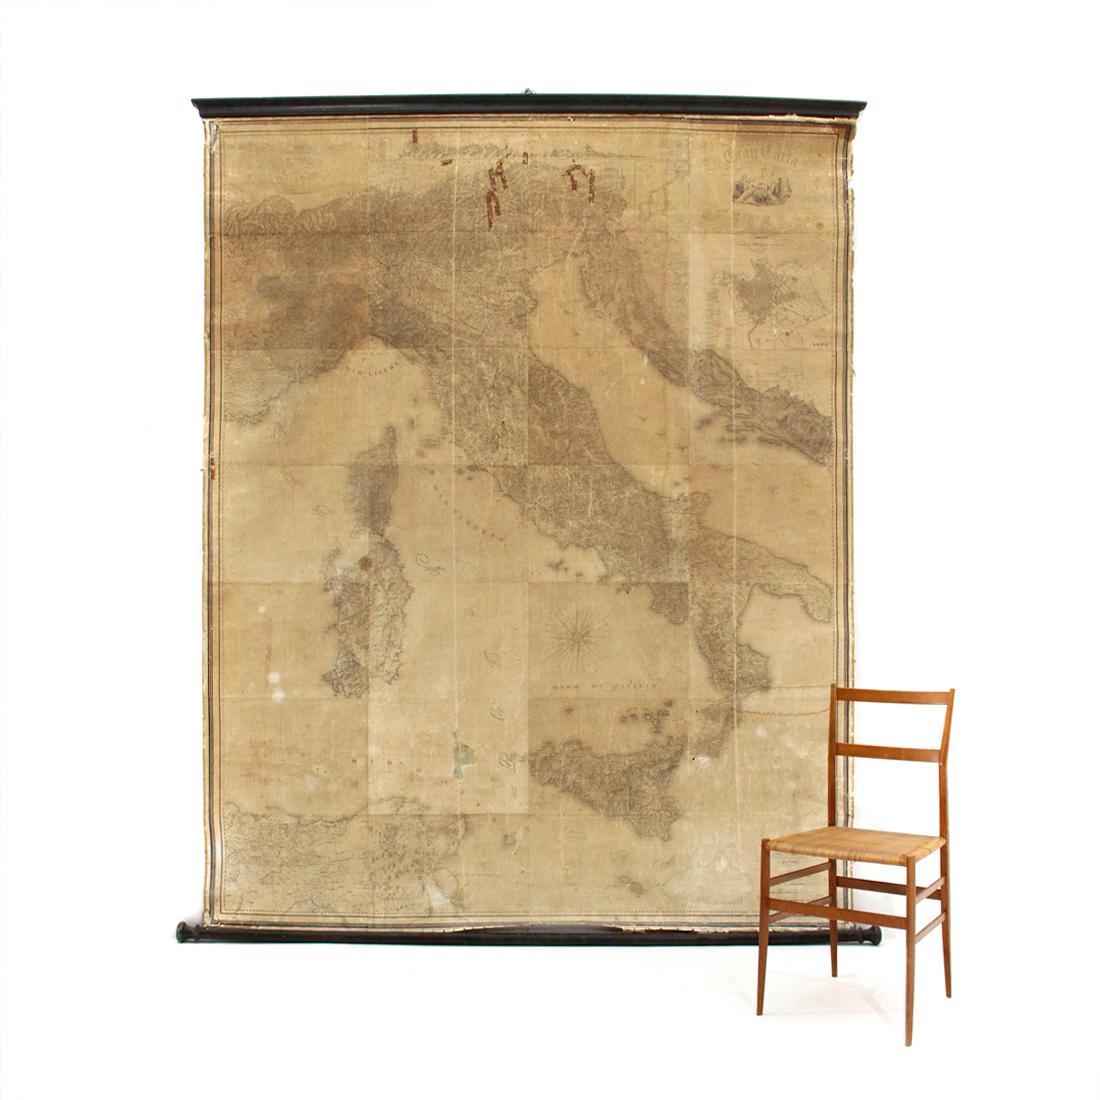 Early ‘900 map of ‘Gran Carta d’Italia’ by Stabilimento Giuseppe Civelli 6